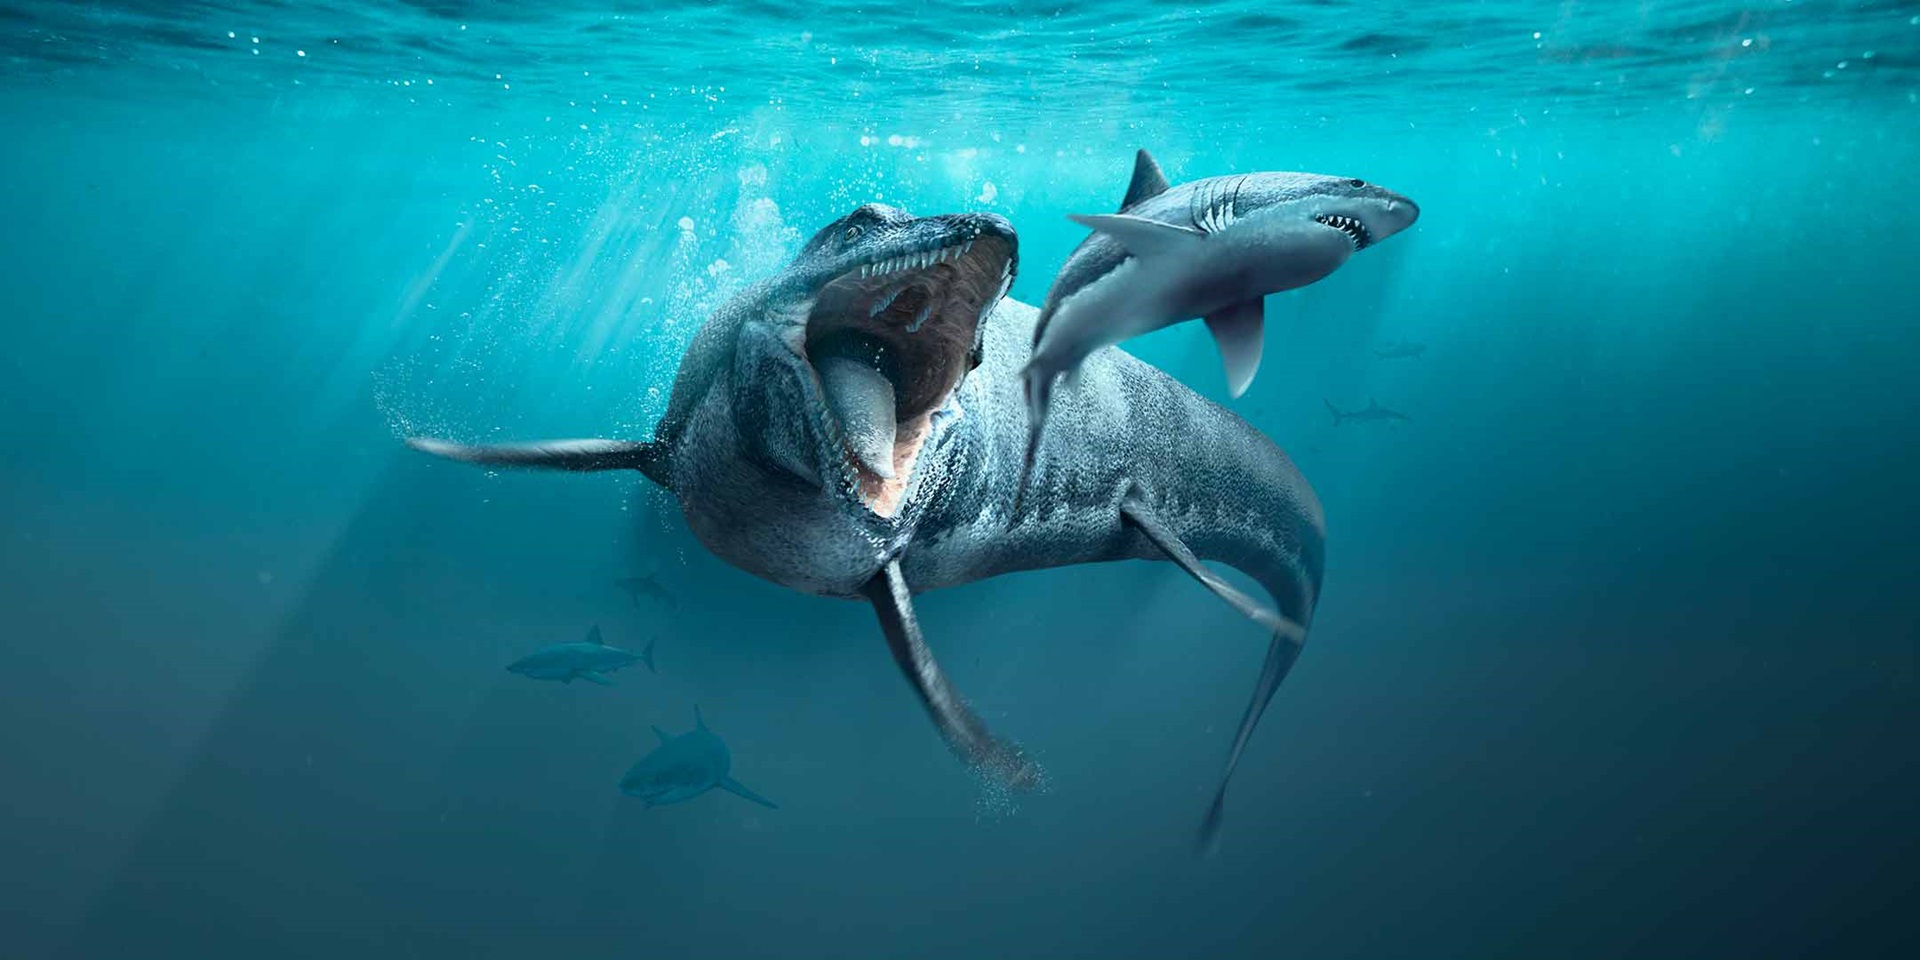 Sea Monsters - Prehistoric Ocean Predators